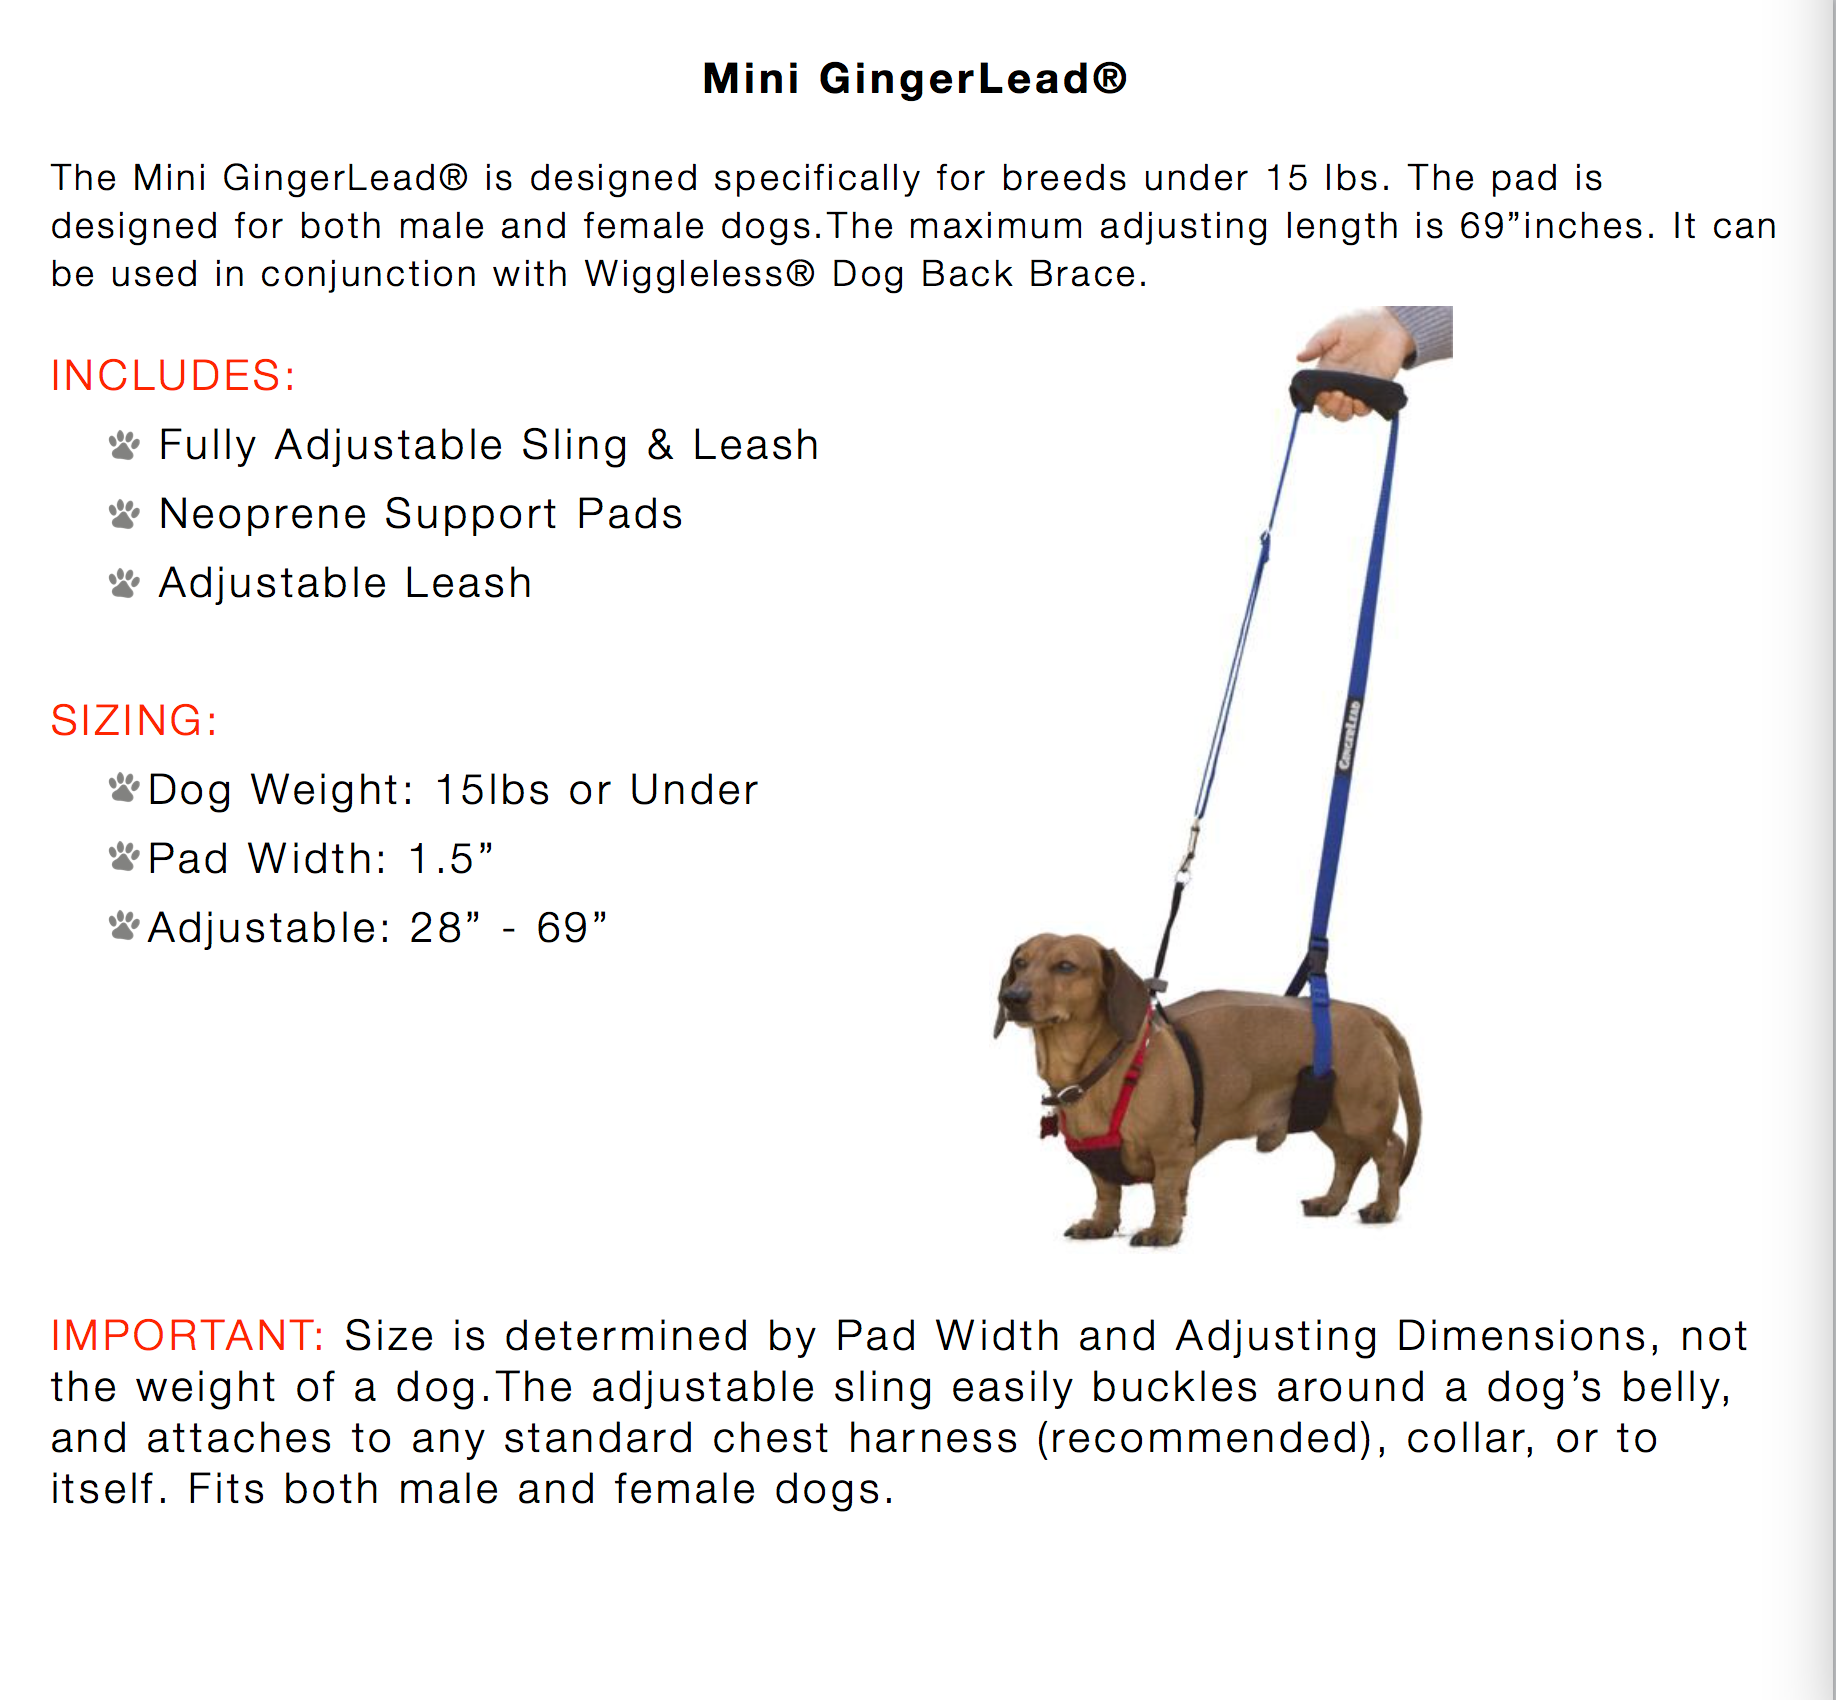 Mini GingerLead description and sizing